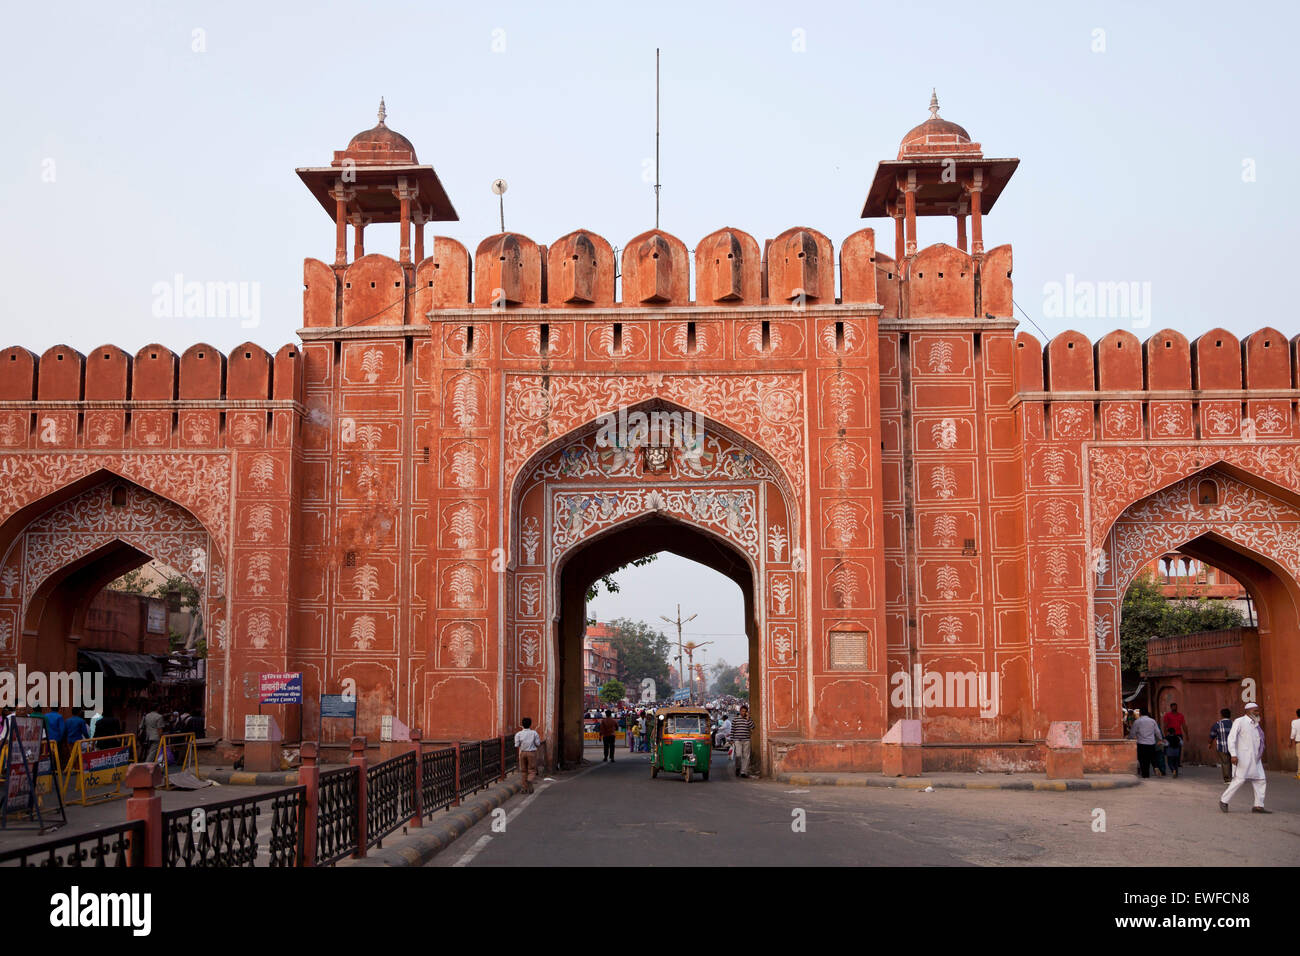 La puerta de la ciudad a la ciudad rosada, Jaipur, Rajasthan, India Foto de stock